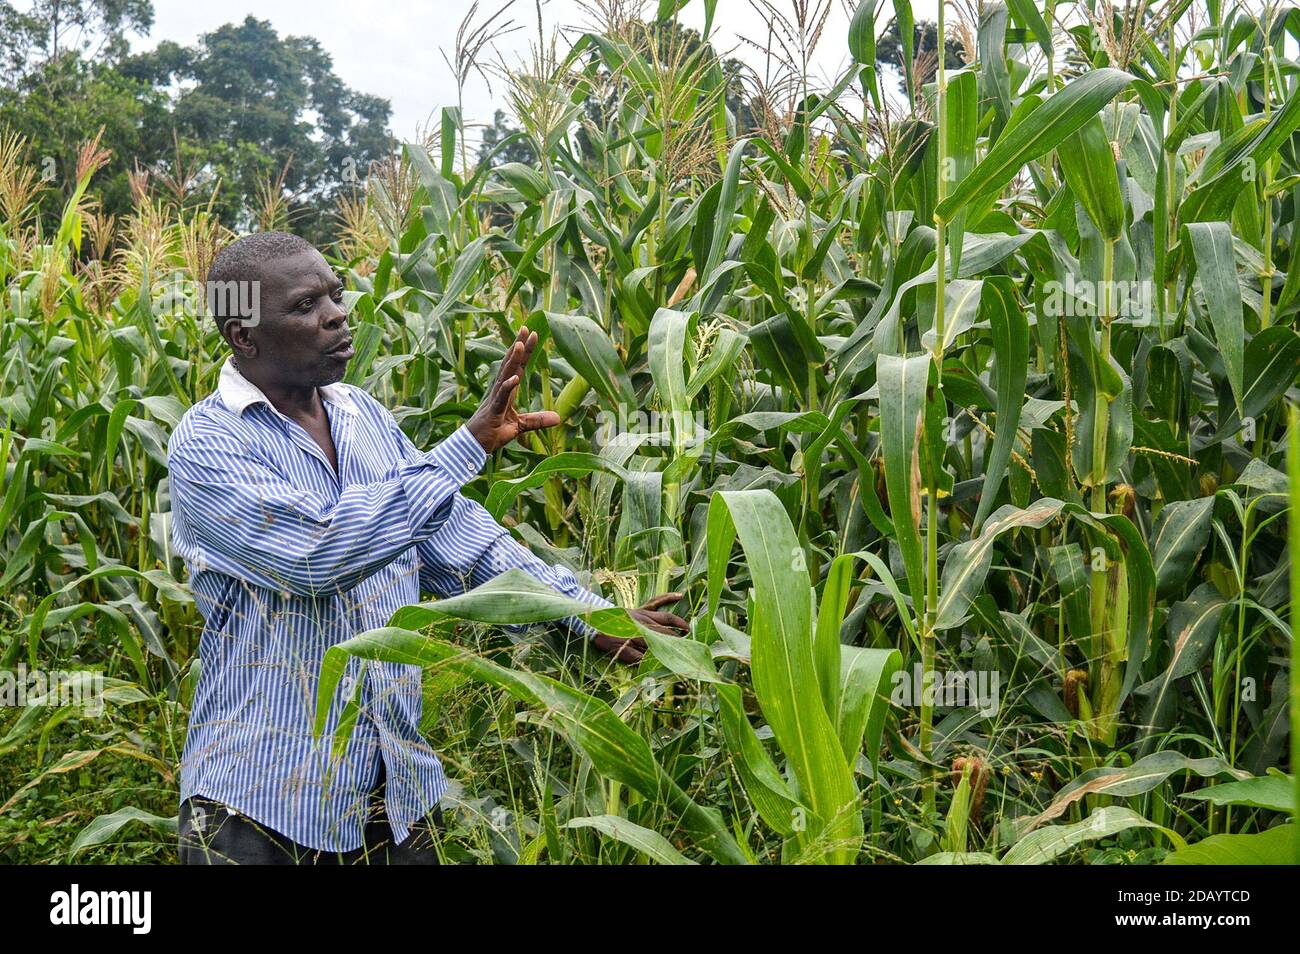 Edward Nsubuga walks through his organic maize crops in Uganda. Stock Photo